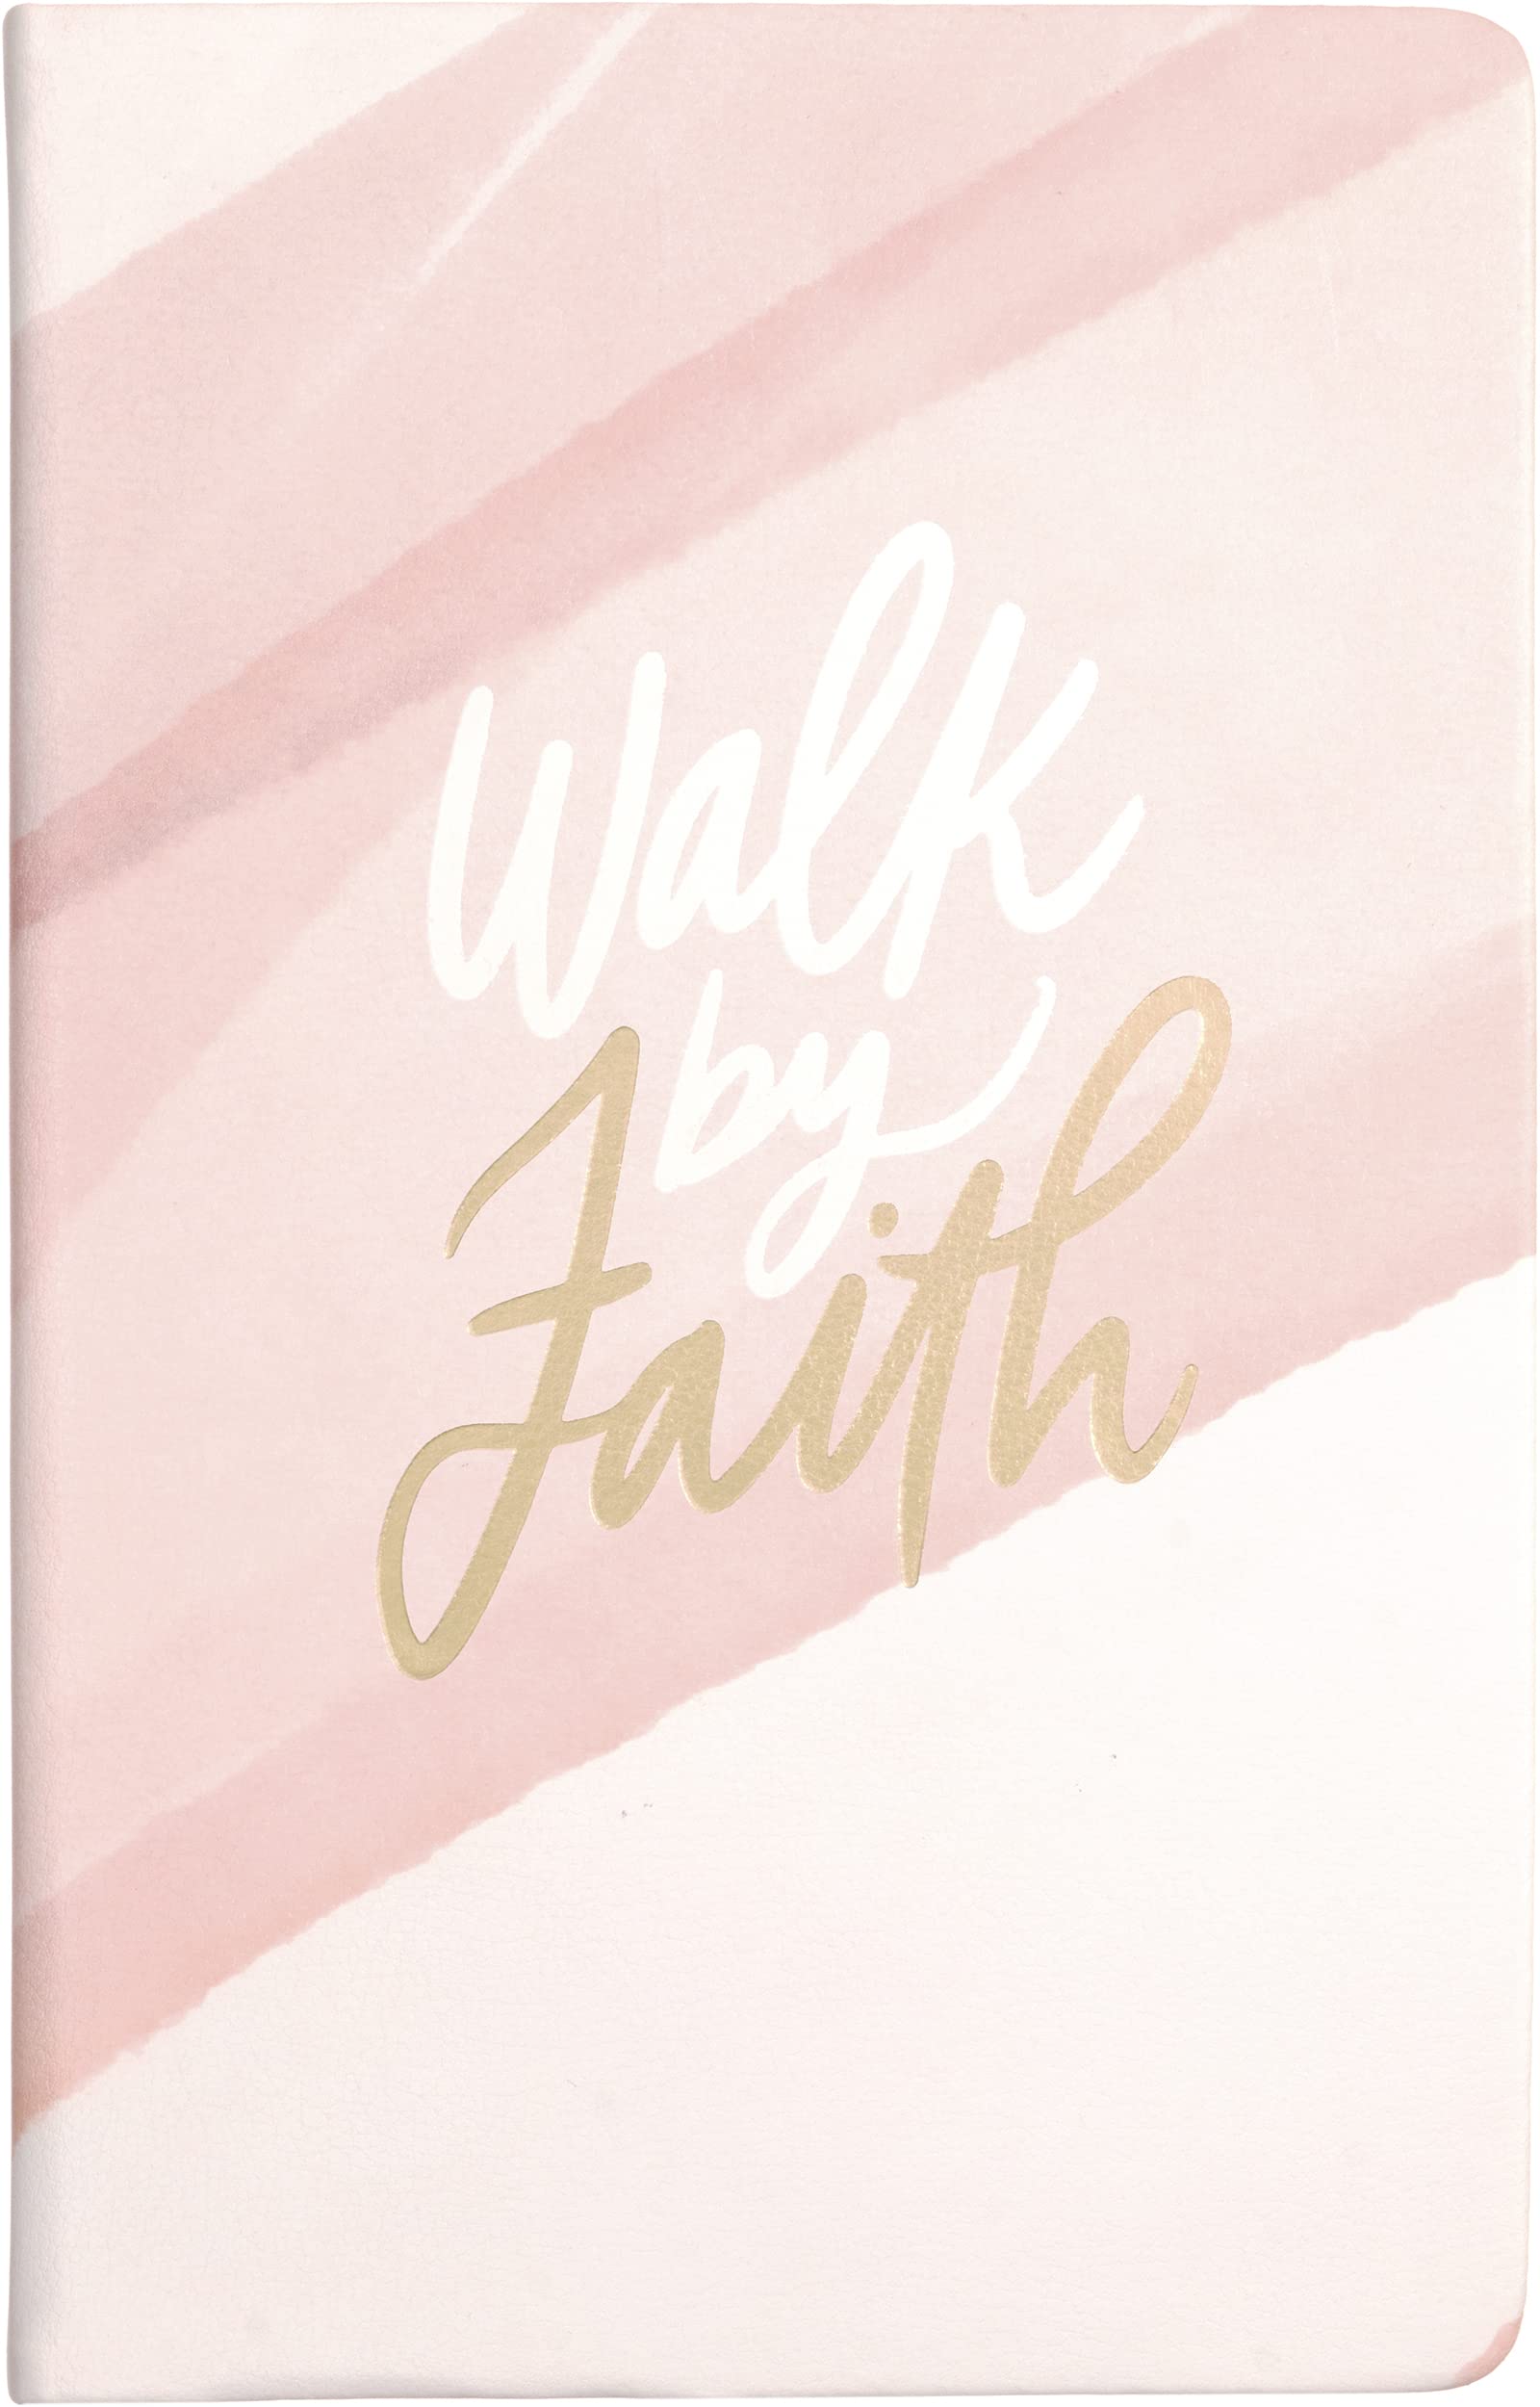 Eccolo Christian Notebook Journal Walk by Faith